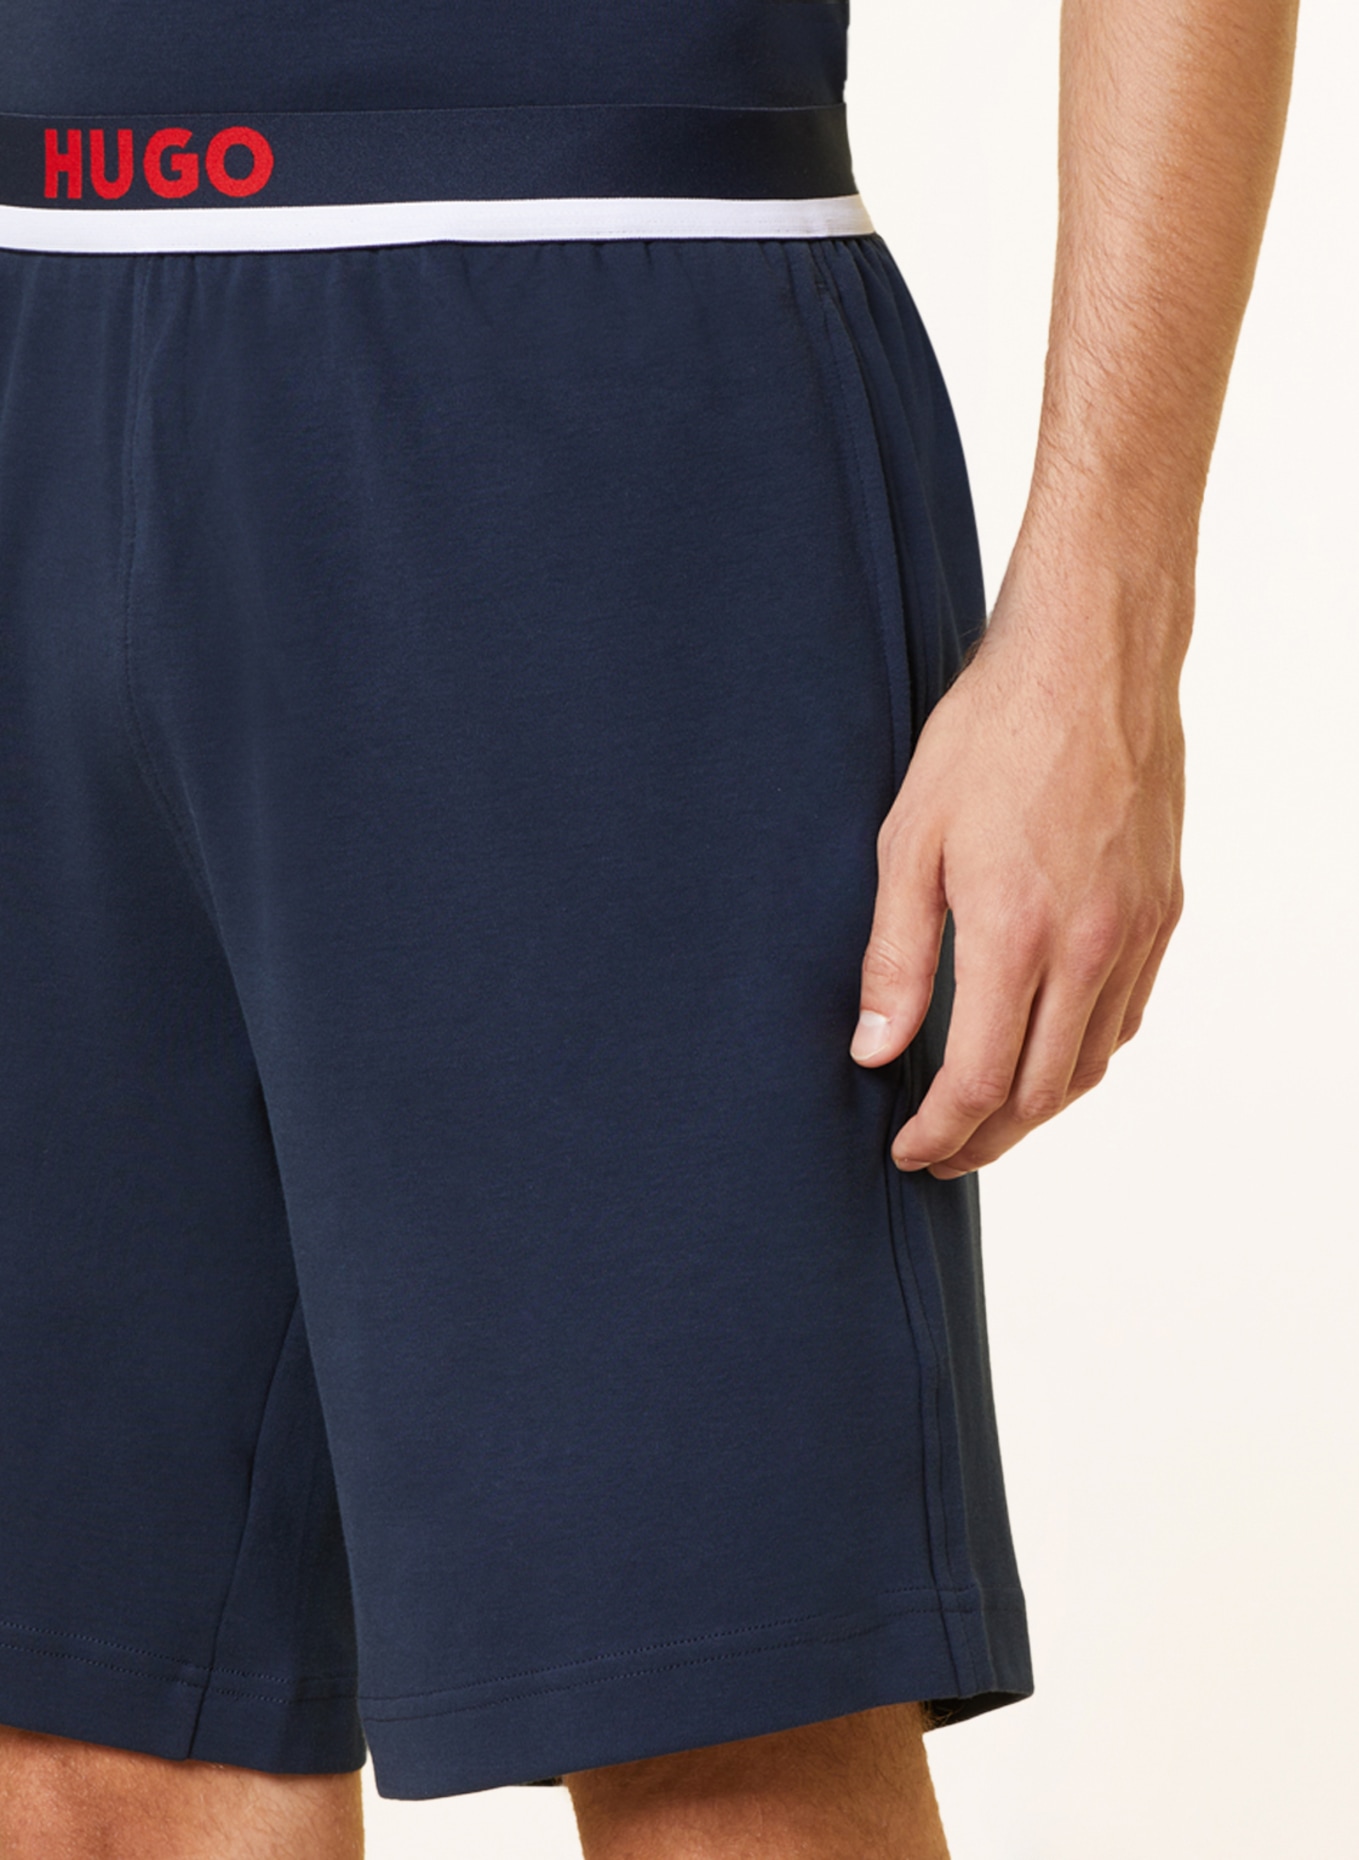 Lounge-Shorts in HUGO COLORBLOCK dunkelblau